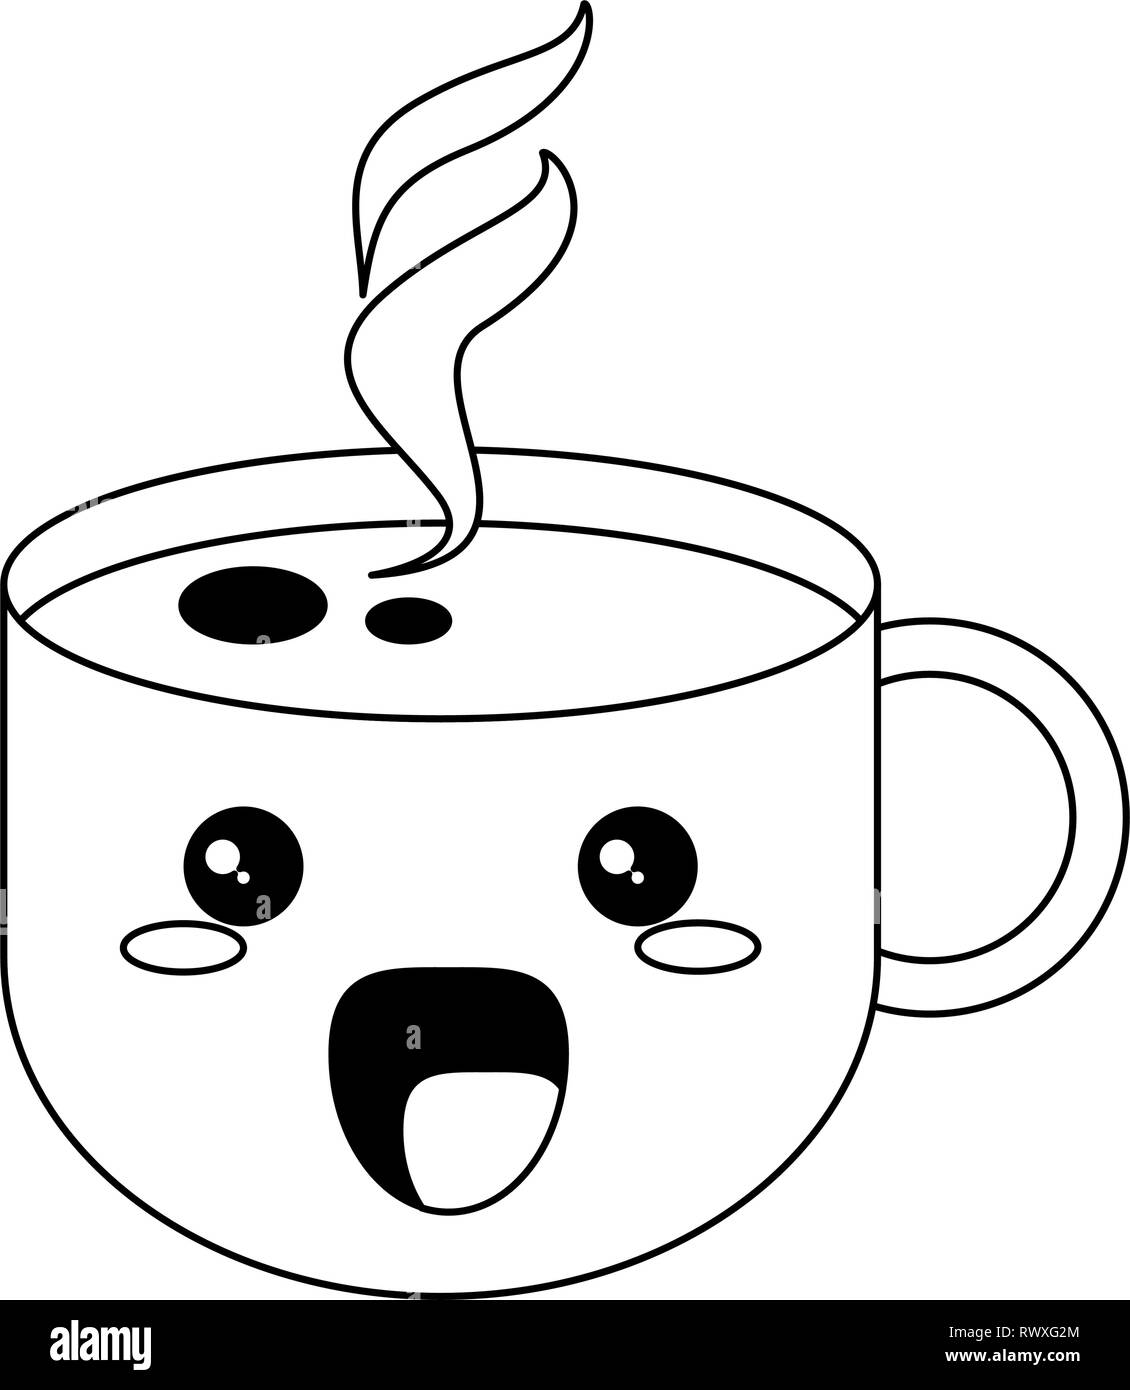 https://c8.alamy.com/compes/rwxg2m/simbolo-de-la-taza-de-cafe-caliente-kawaii-caricatura-en-blanco-y-negro-rwxg2m.jpg